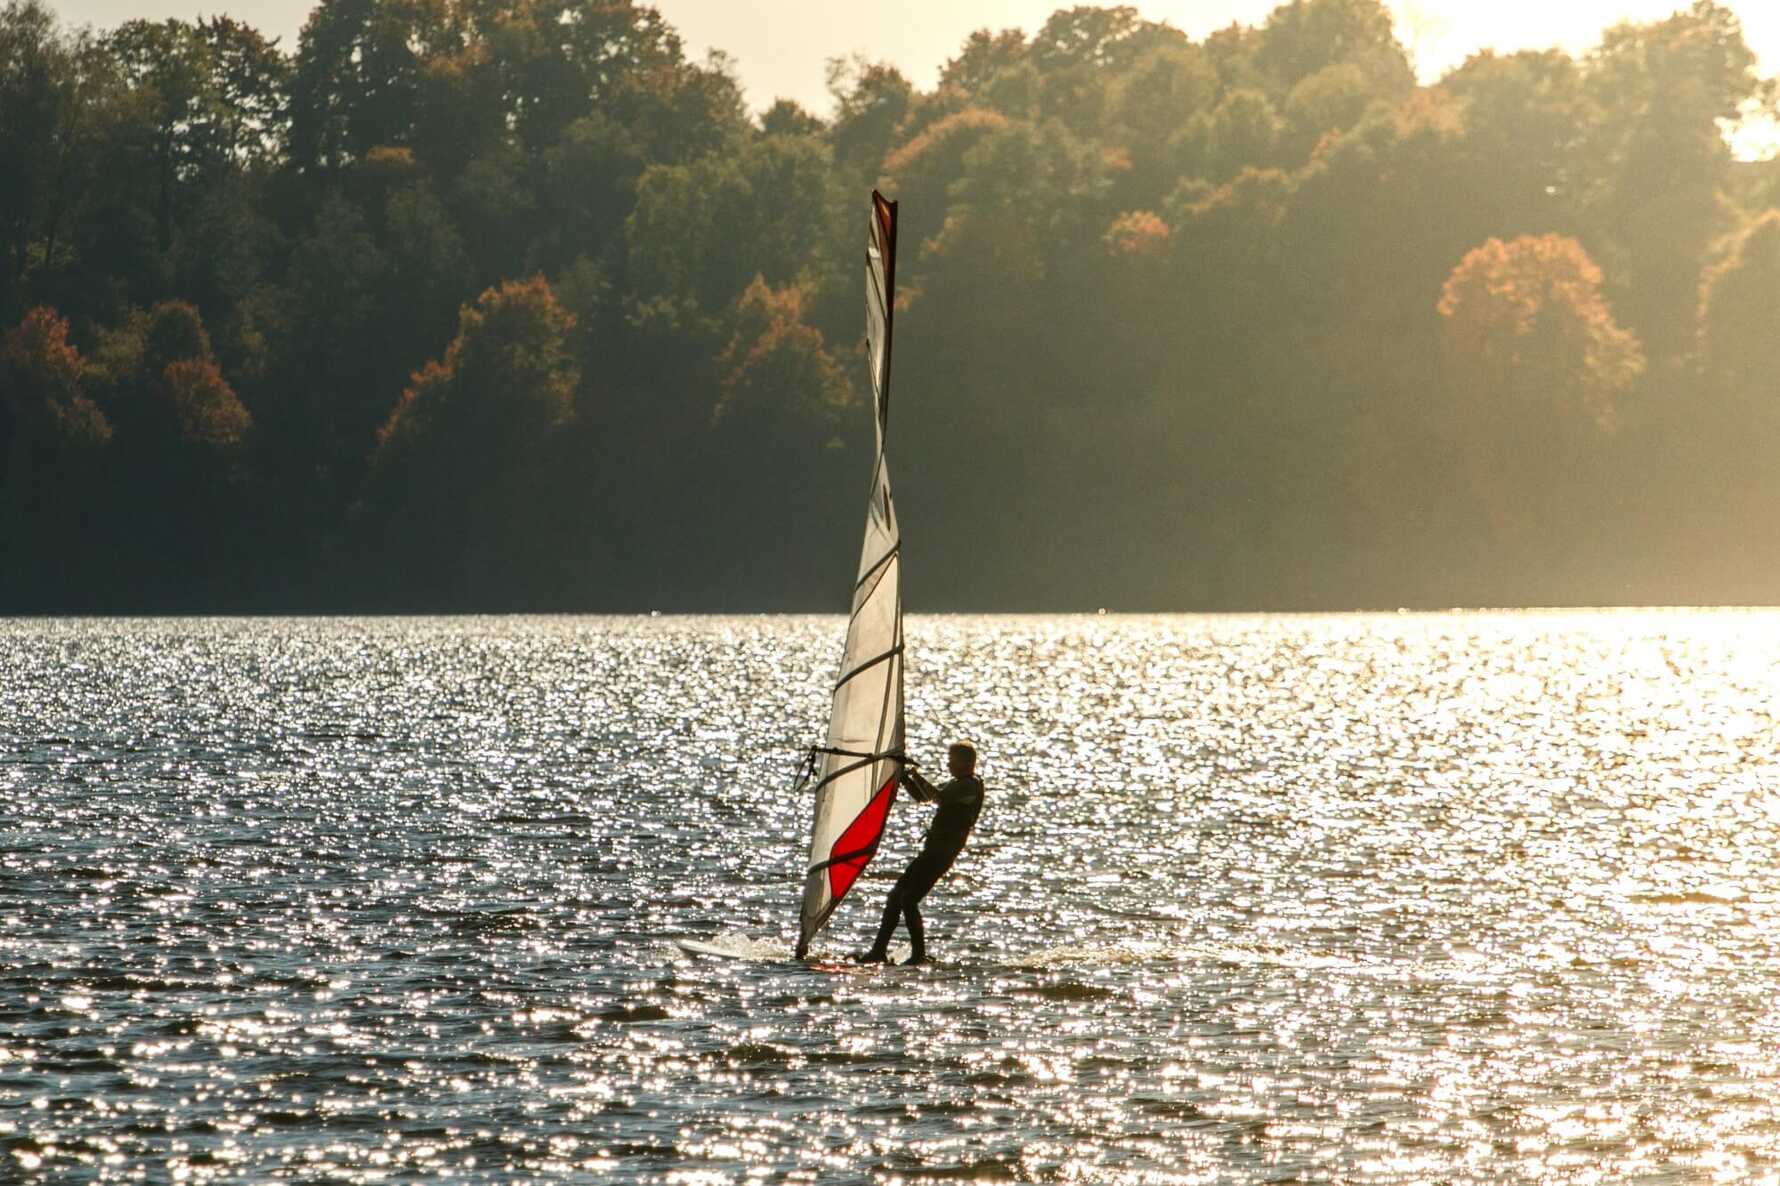 A windsurfer on a lake